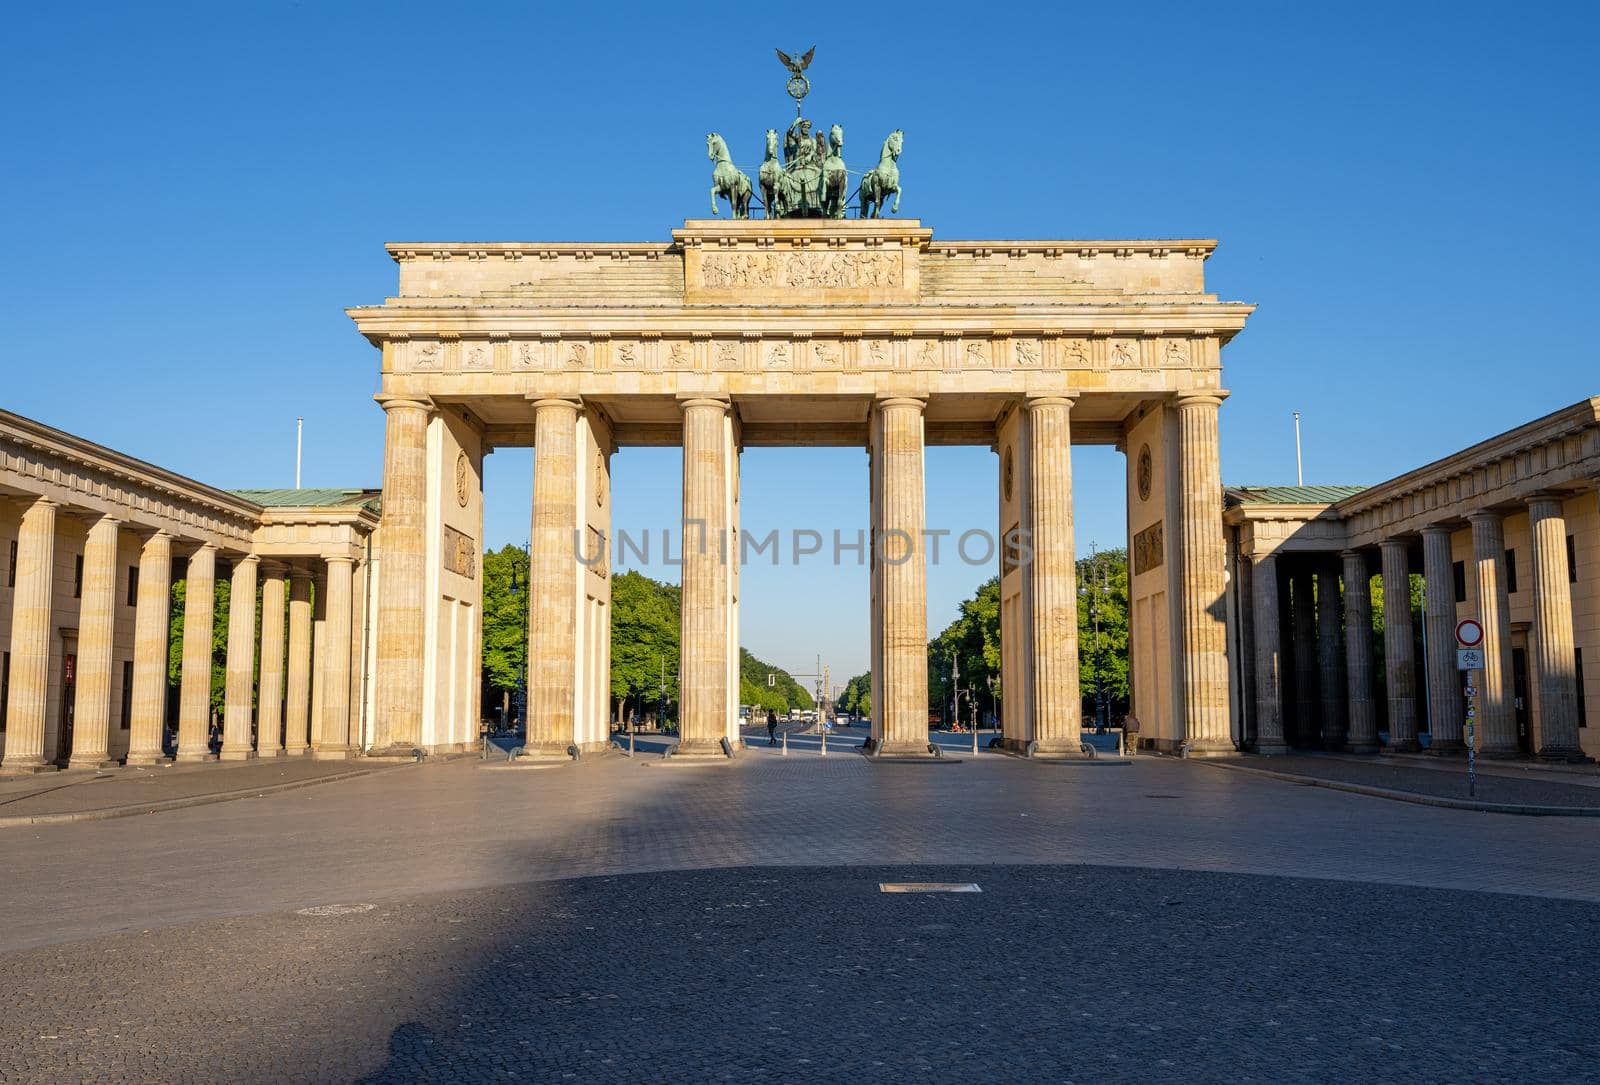 The famous Brandenburg Gate in Berlin by elxeneize